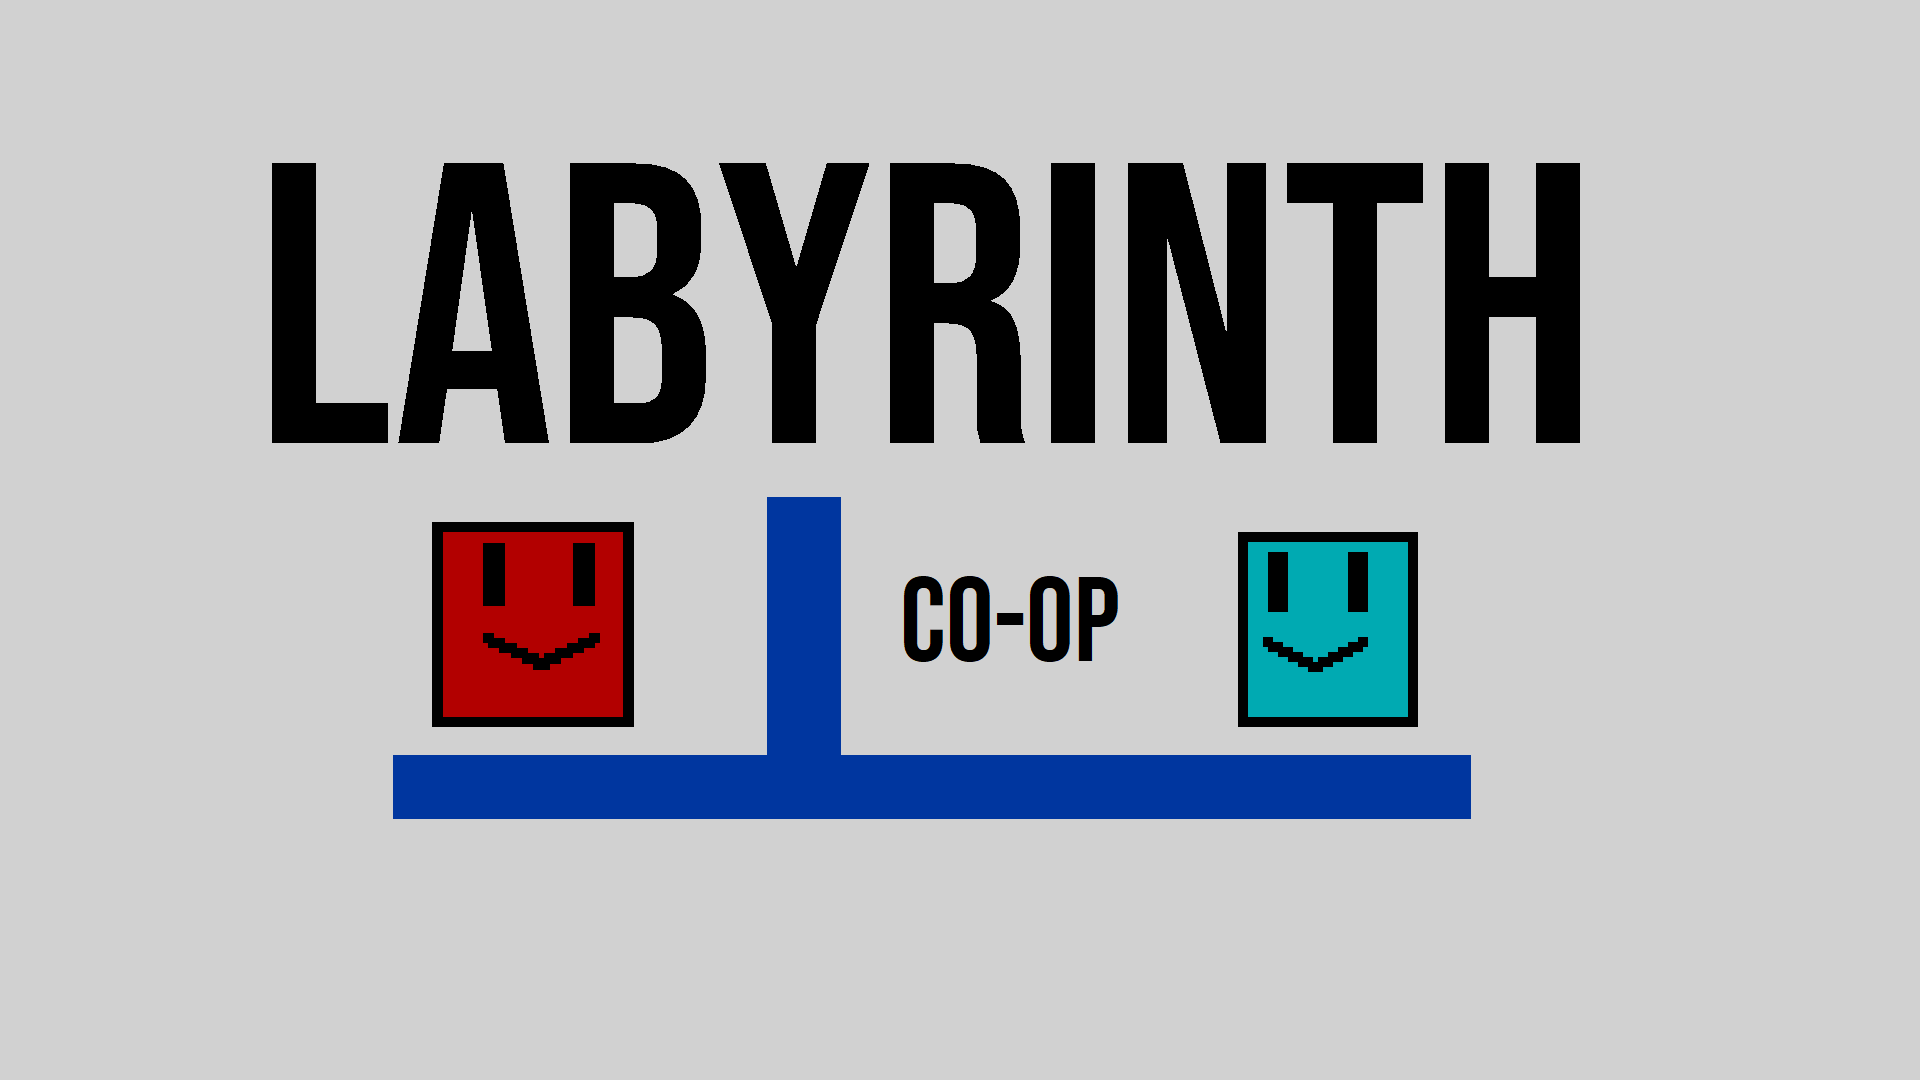 Labyrinth Co-op